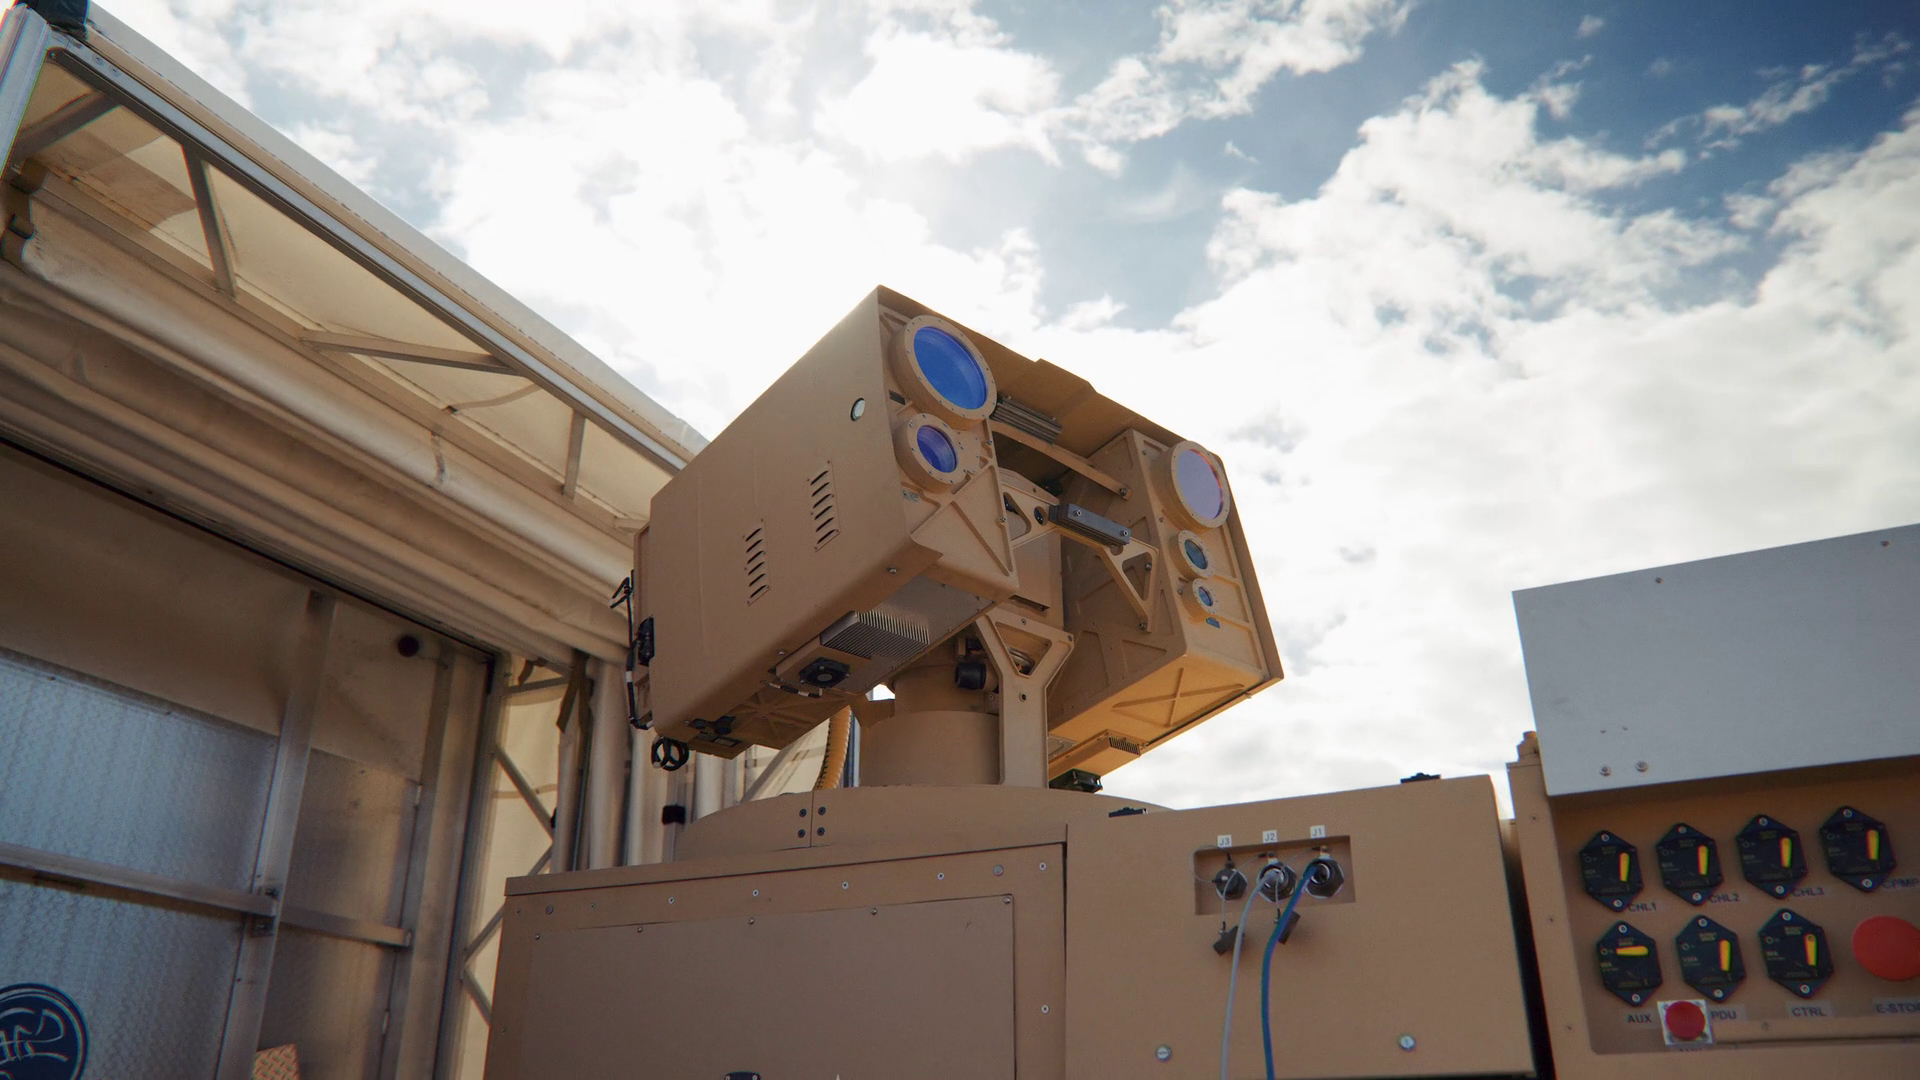 Američka vojska počela da koristi lasersko oružje na Bliskom istoku da bi obarala dronove